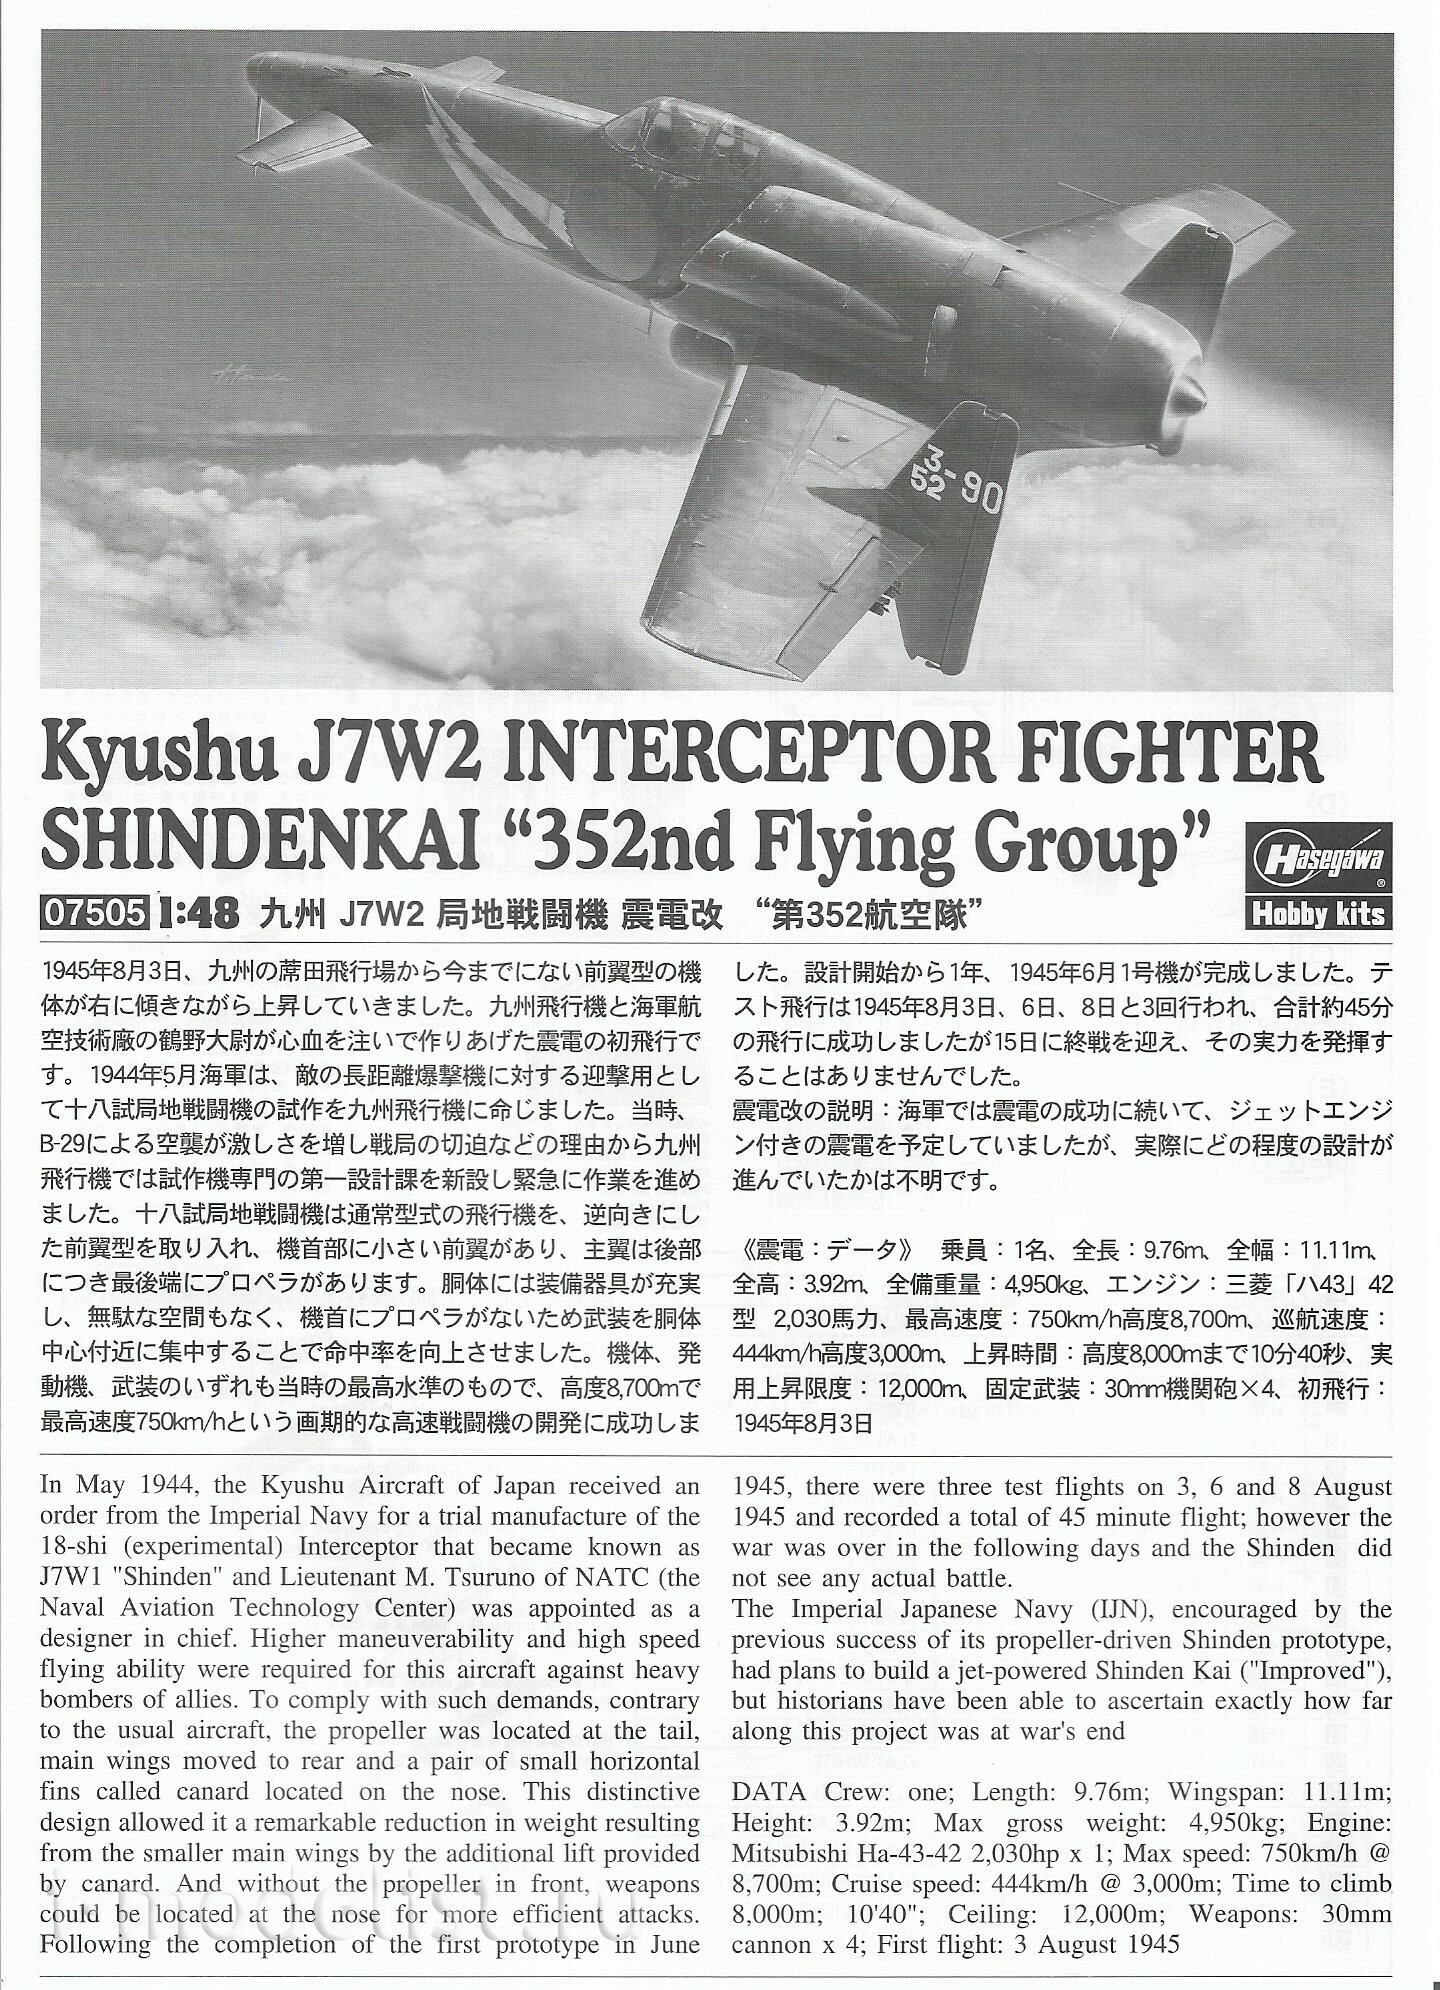 07505 Hasegawa 1/48 Истребитель Kyushu J7W2 Interceptor Fighter Shinden Kai